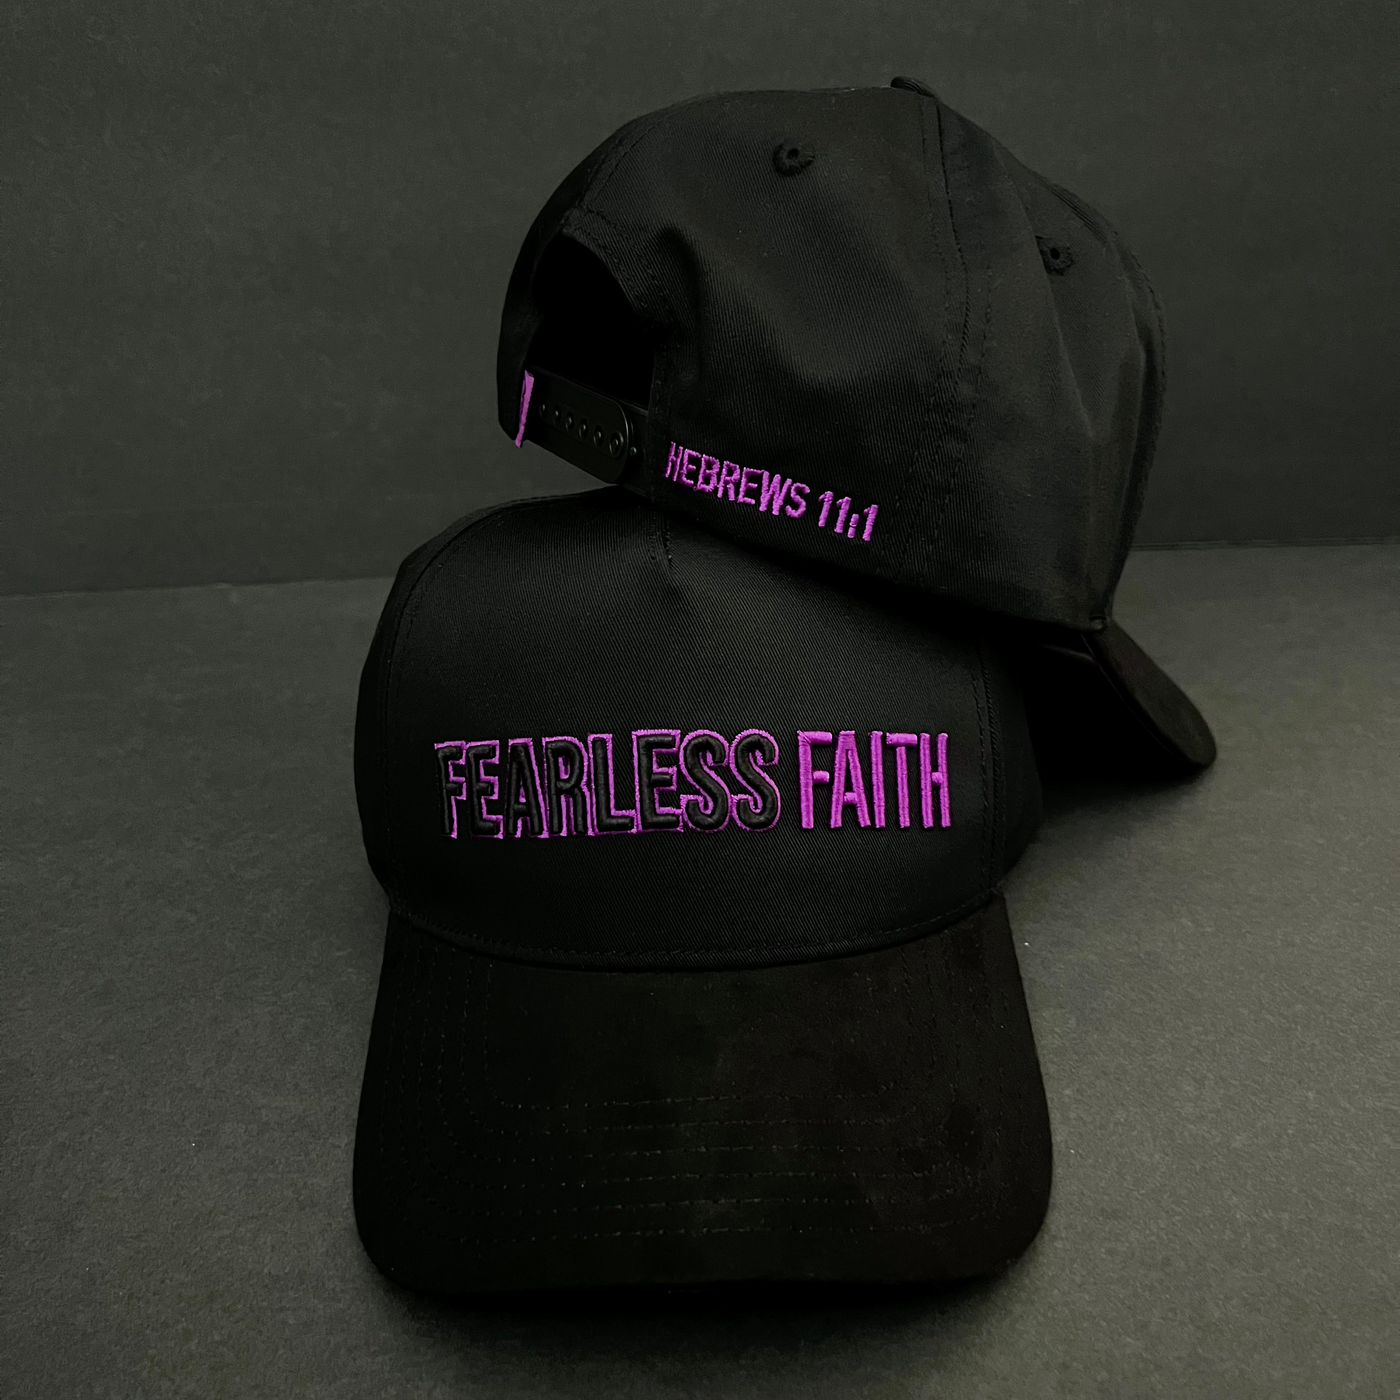 Gorra snapback de perfil medio Fearless Faith - Negro + Púrpura 